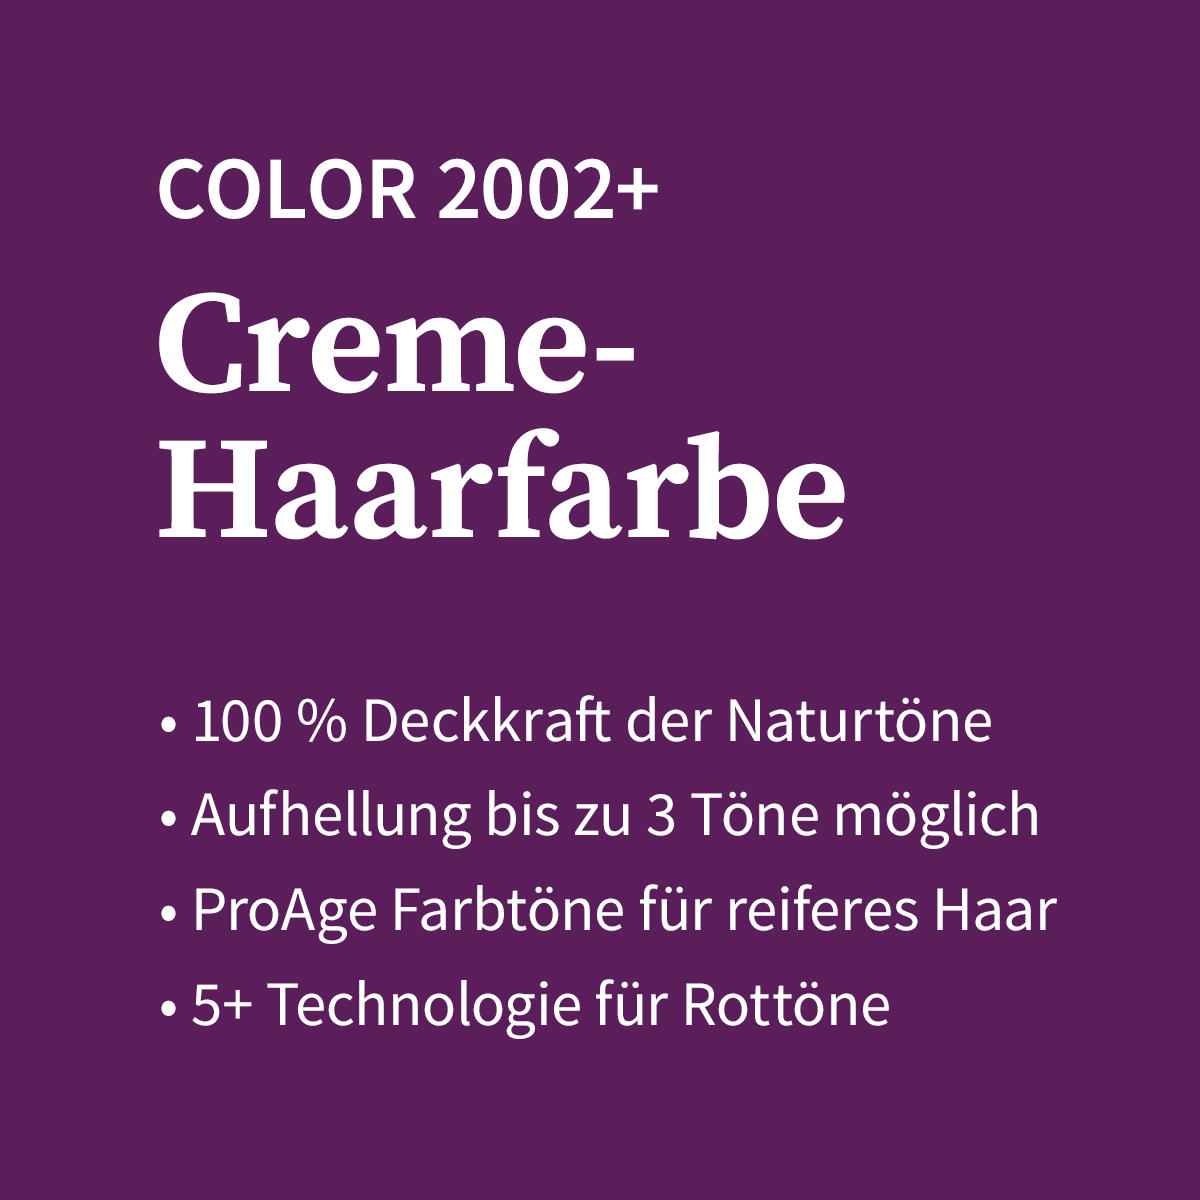 Basler Color 2002+ Cremehaarfarbe 7/7 mittelblond braun, Tube 60 ml - 4